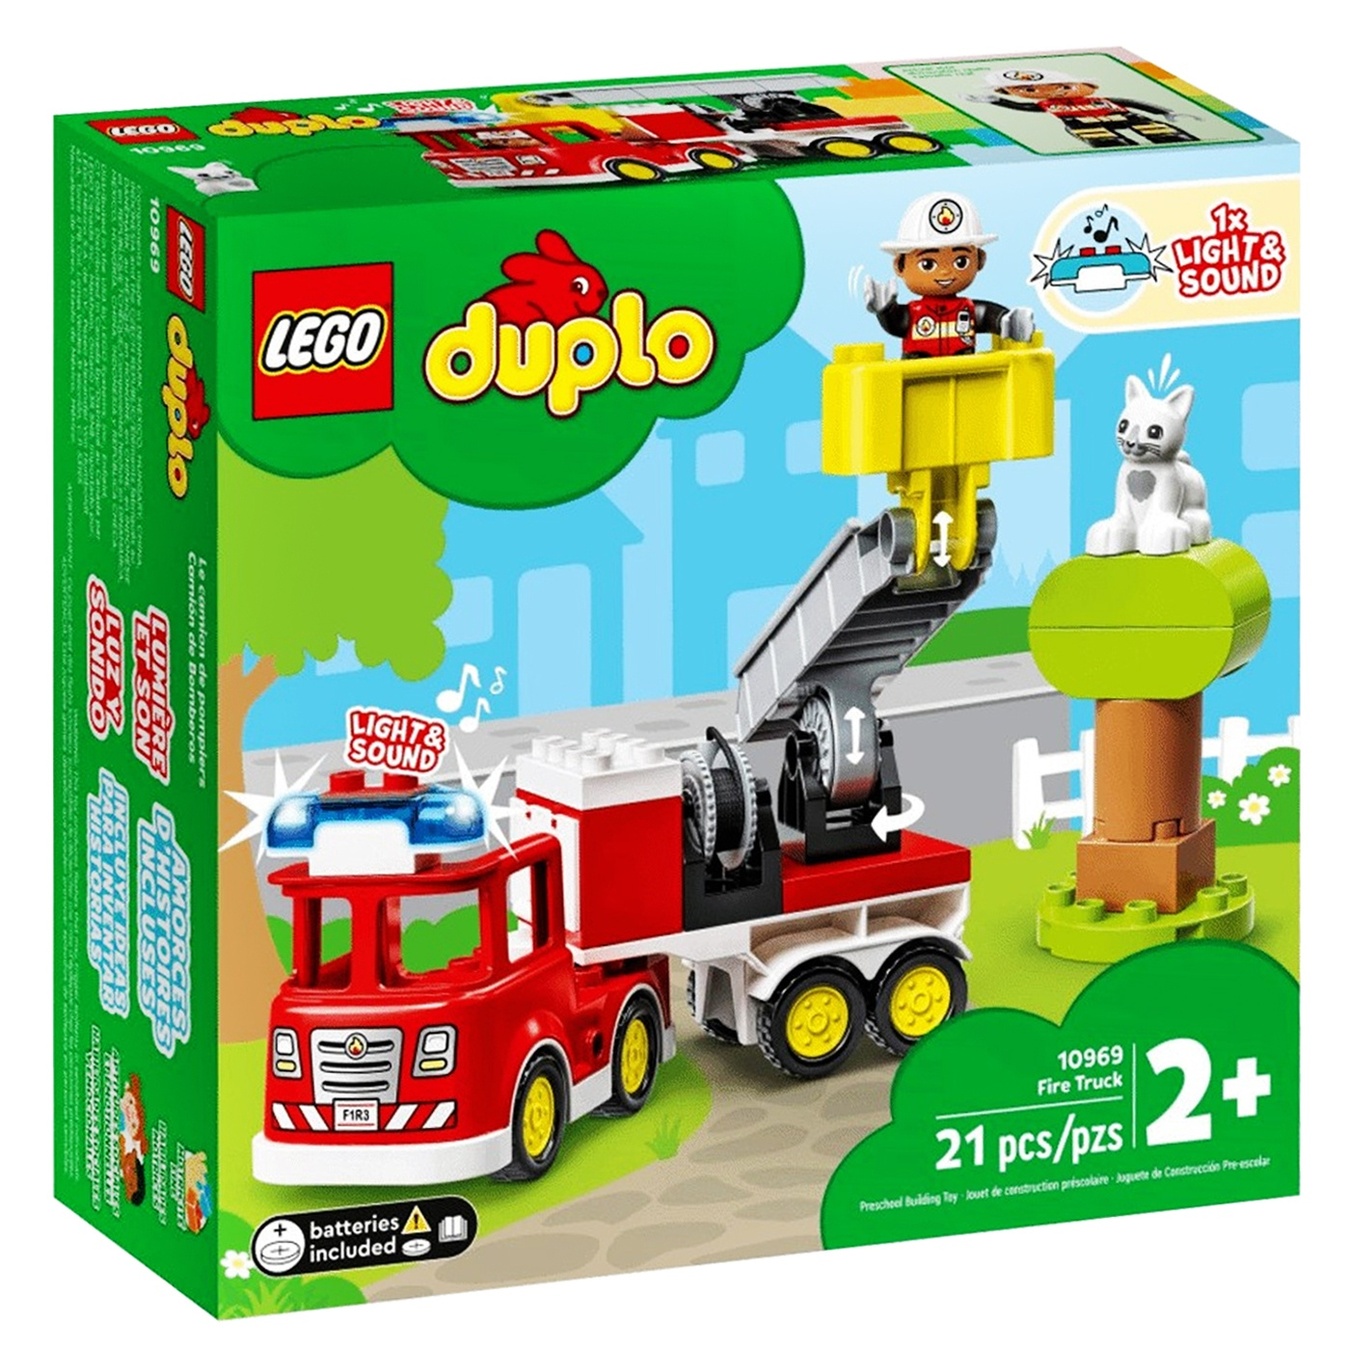 Constructor LEGO Fire engine Duplo City